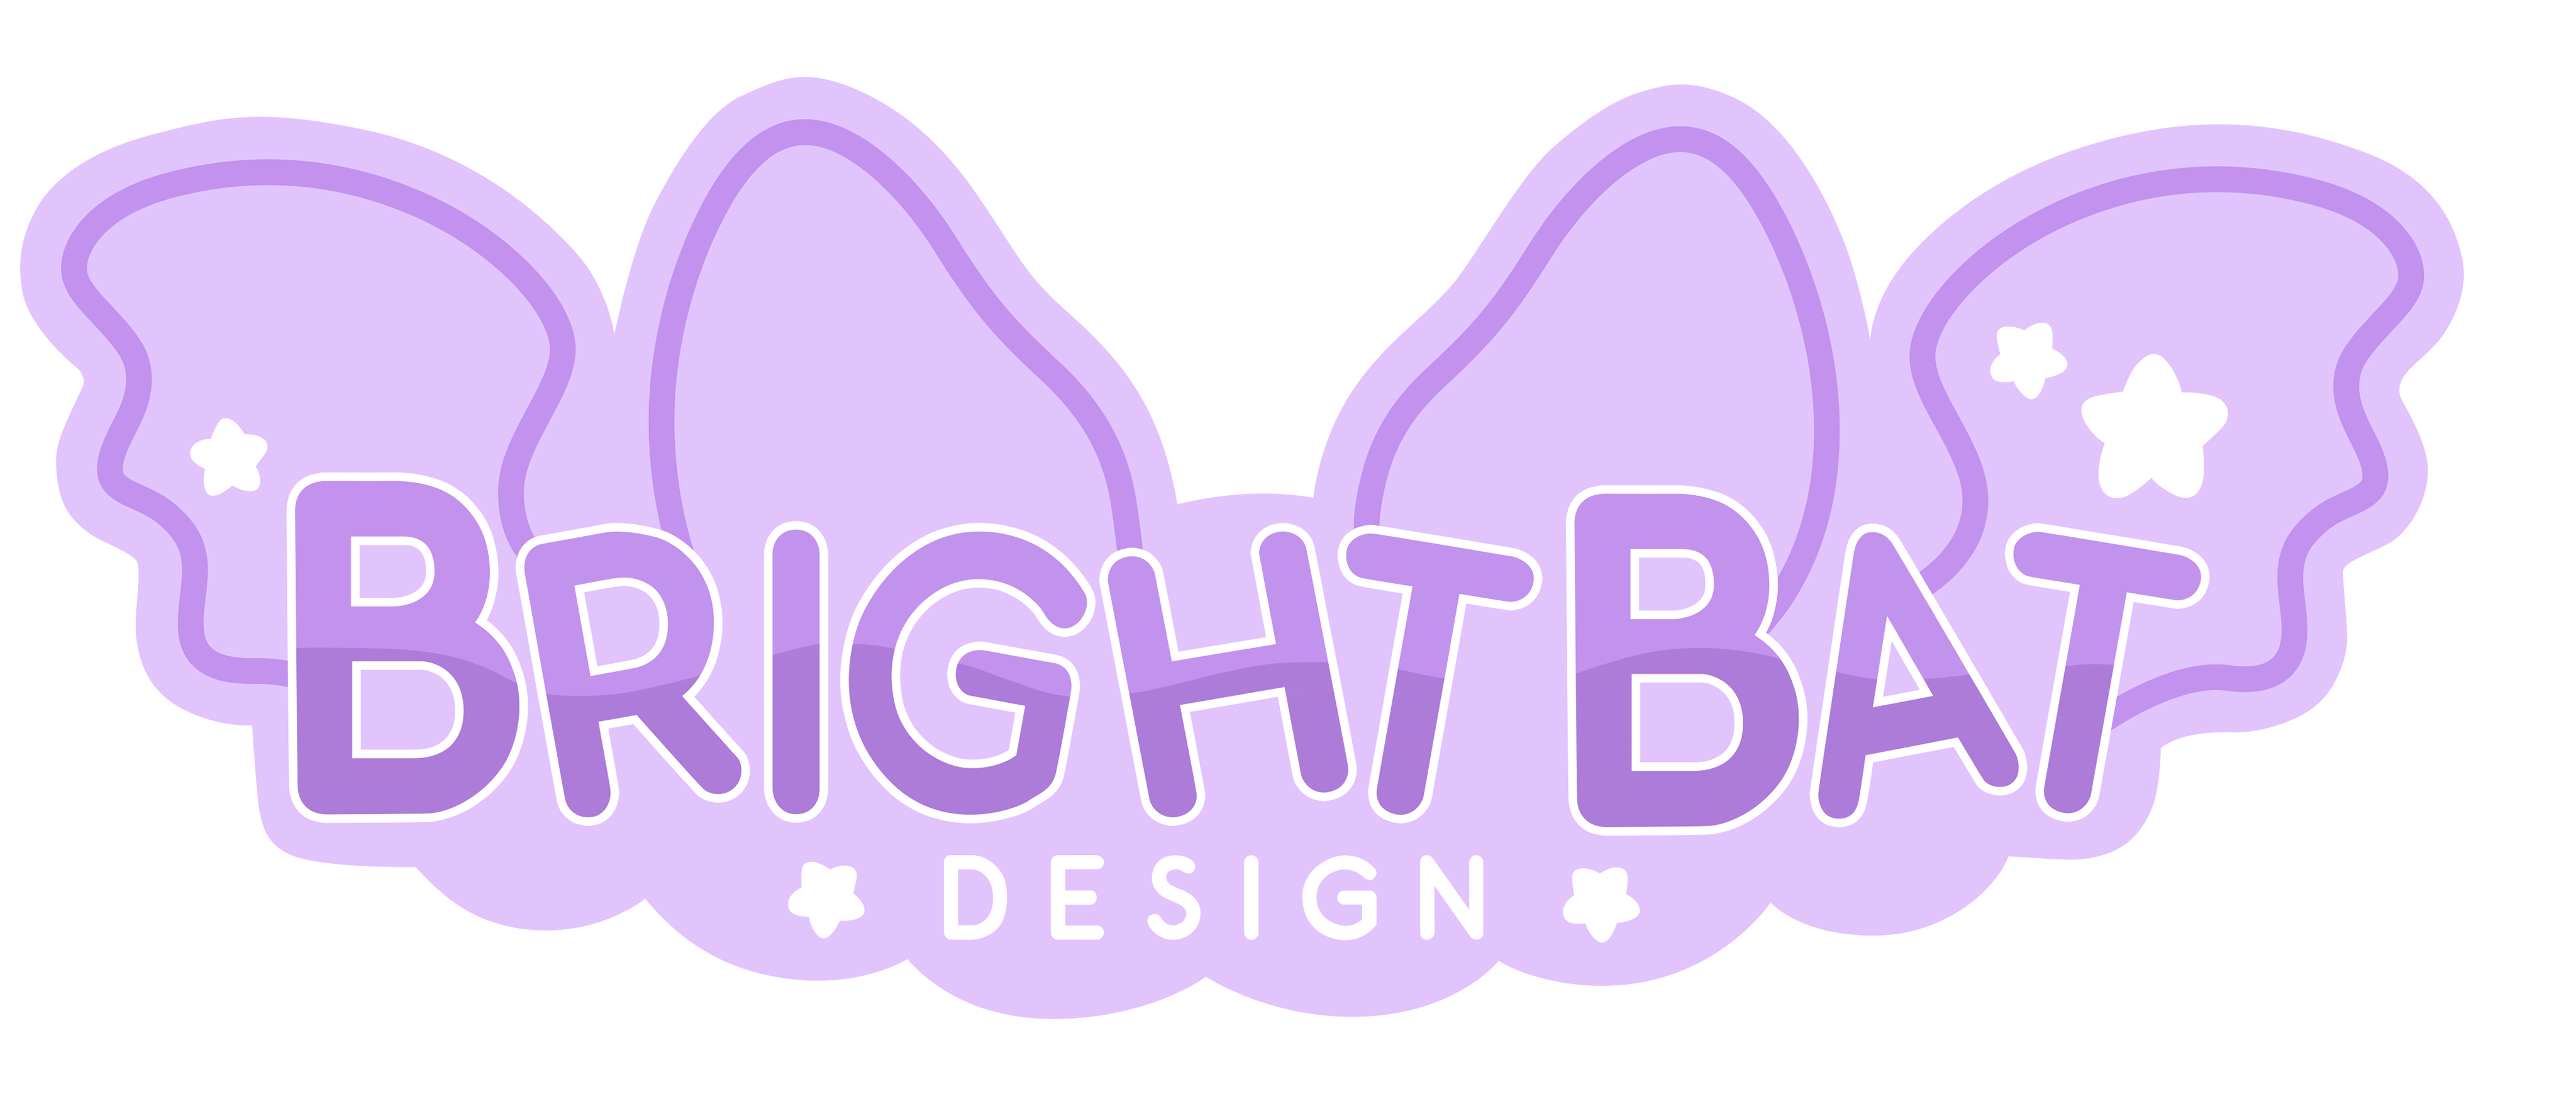 BrightBatDesign